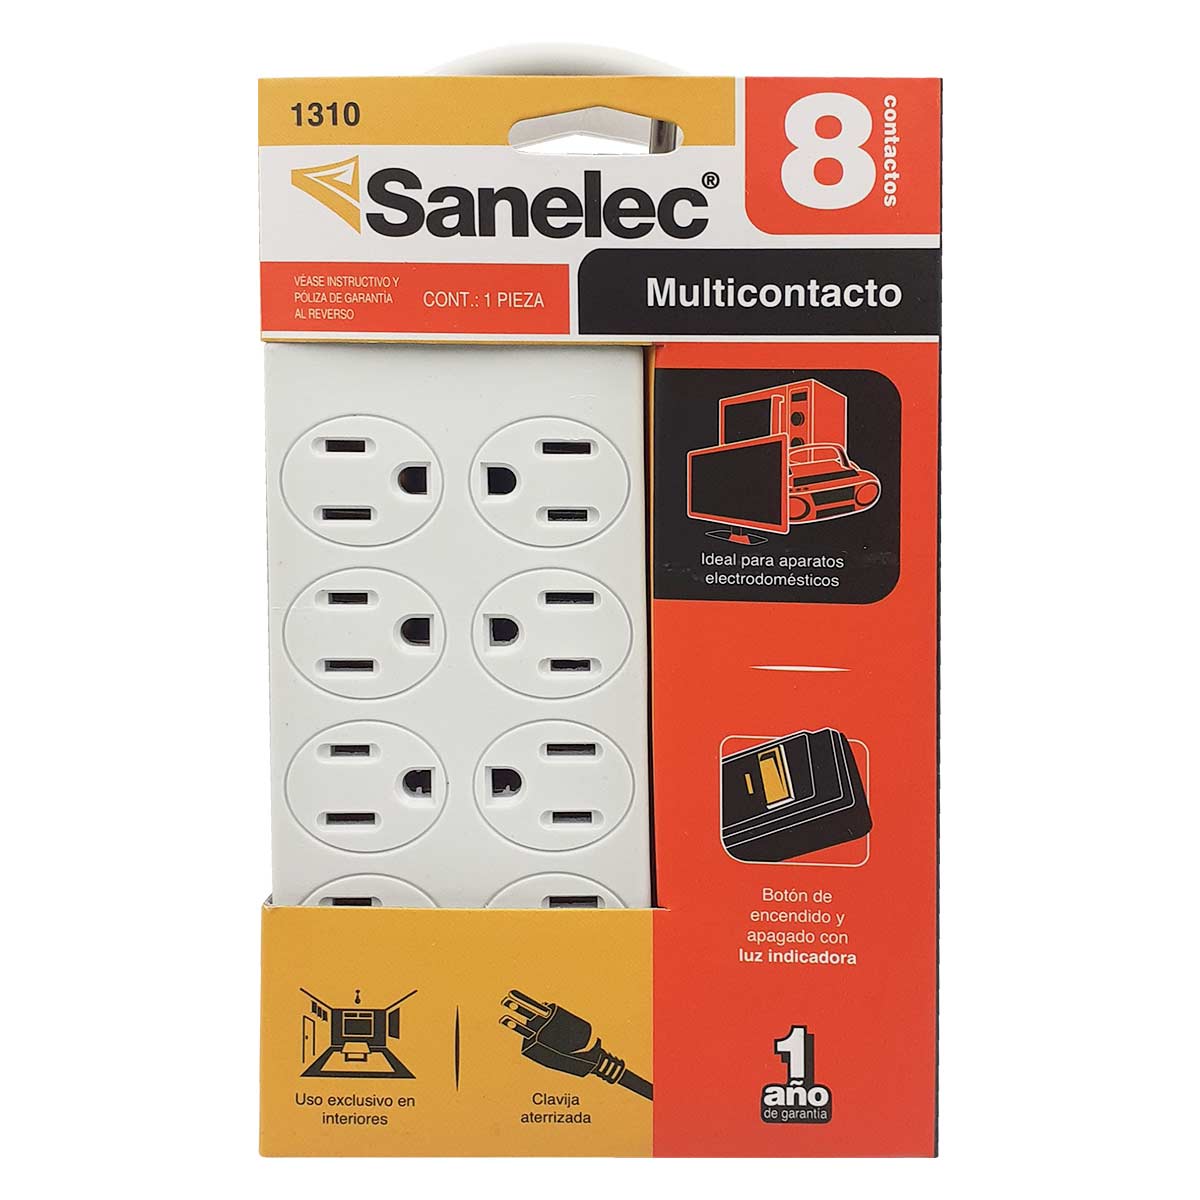 Multicontacto 8 Entradas Sanelec 1310 Cable 74 Cm Boton Luz Indicadora SANELEC Ferreabasto